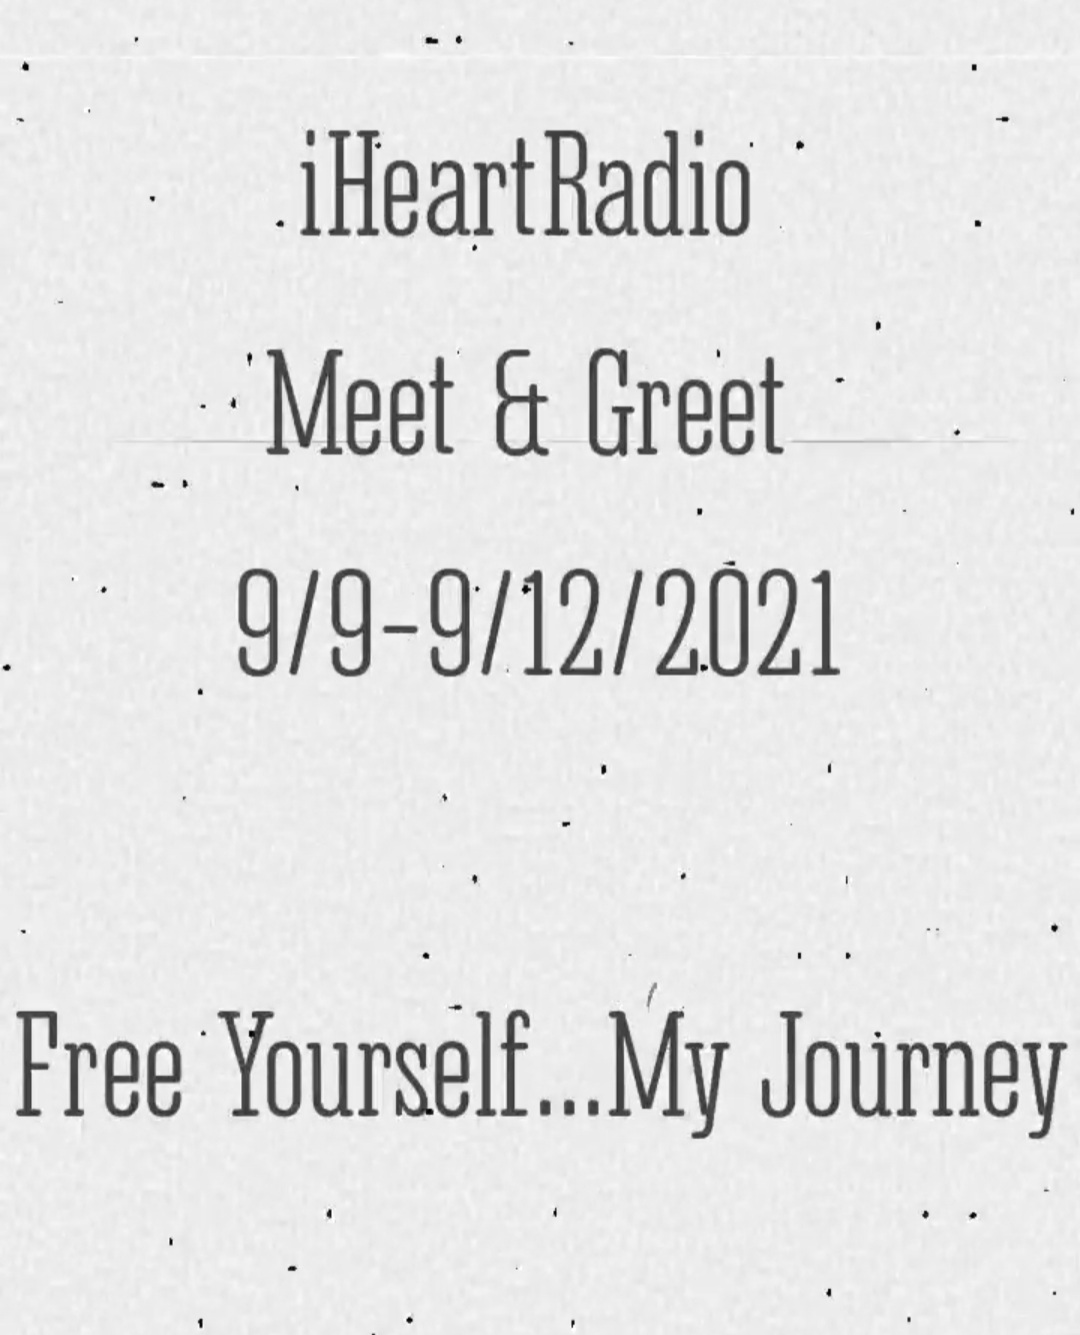 iHeartradio_Free_Yourself_My_Journey_M_G_2021...